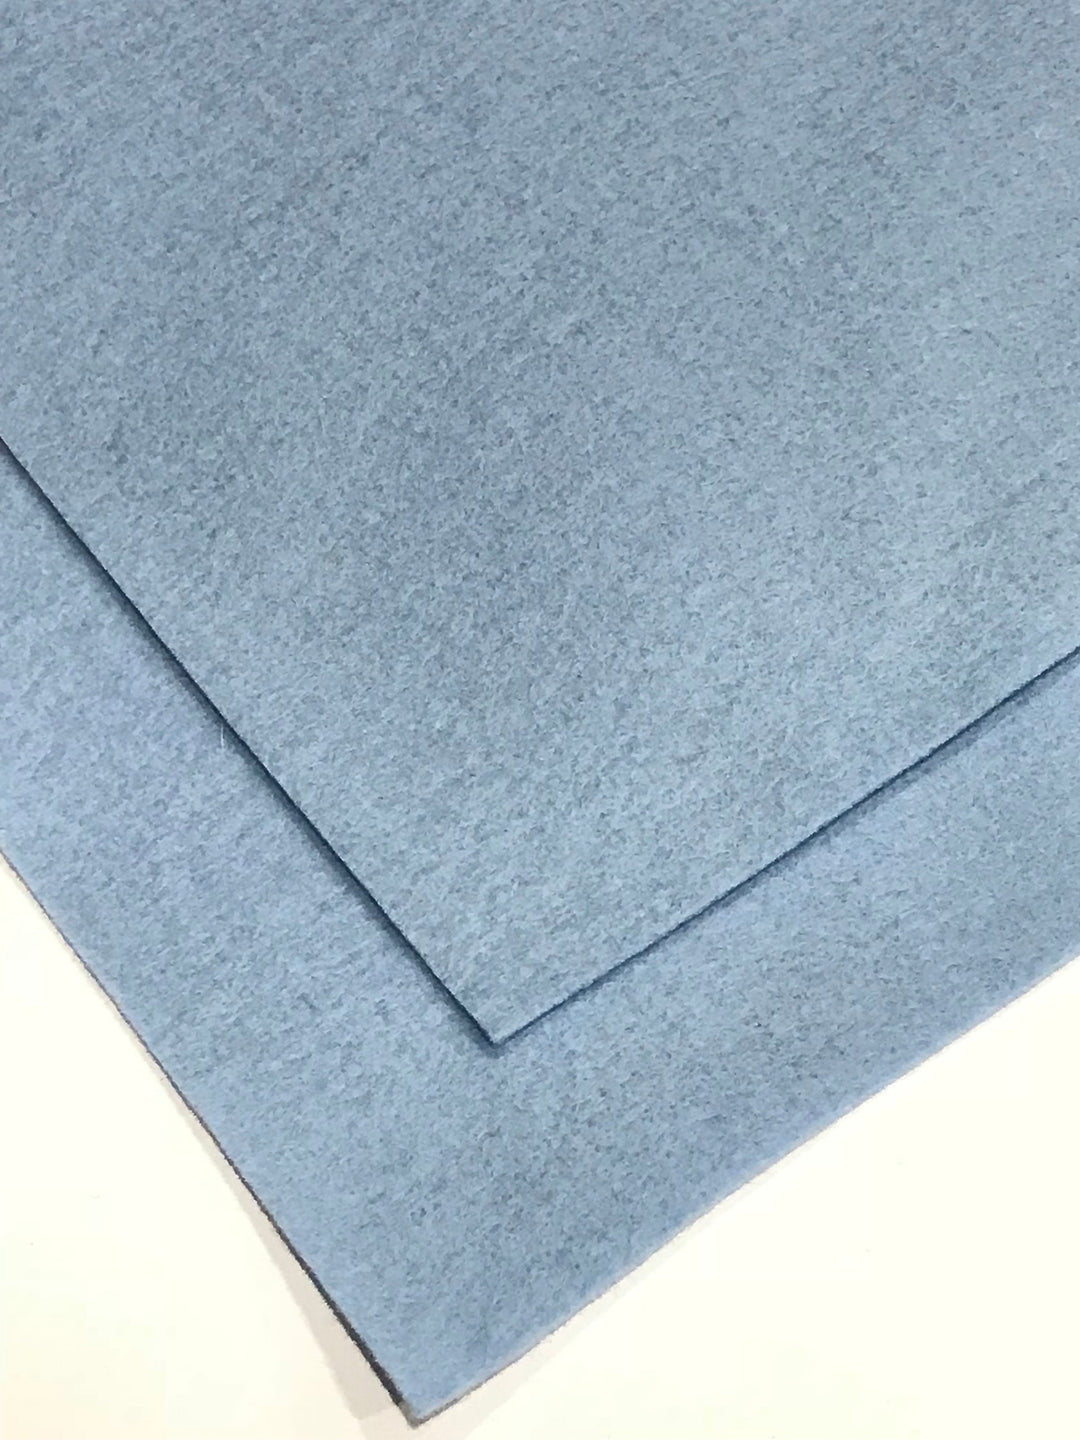 1mm Light Sky Blue Merino Wool Felt 8 x 11" Sheet - No. 75